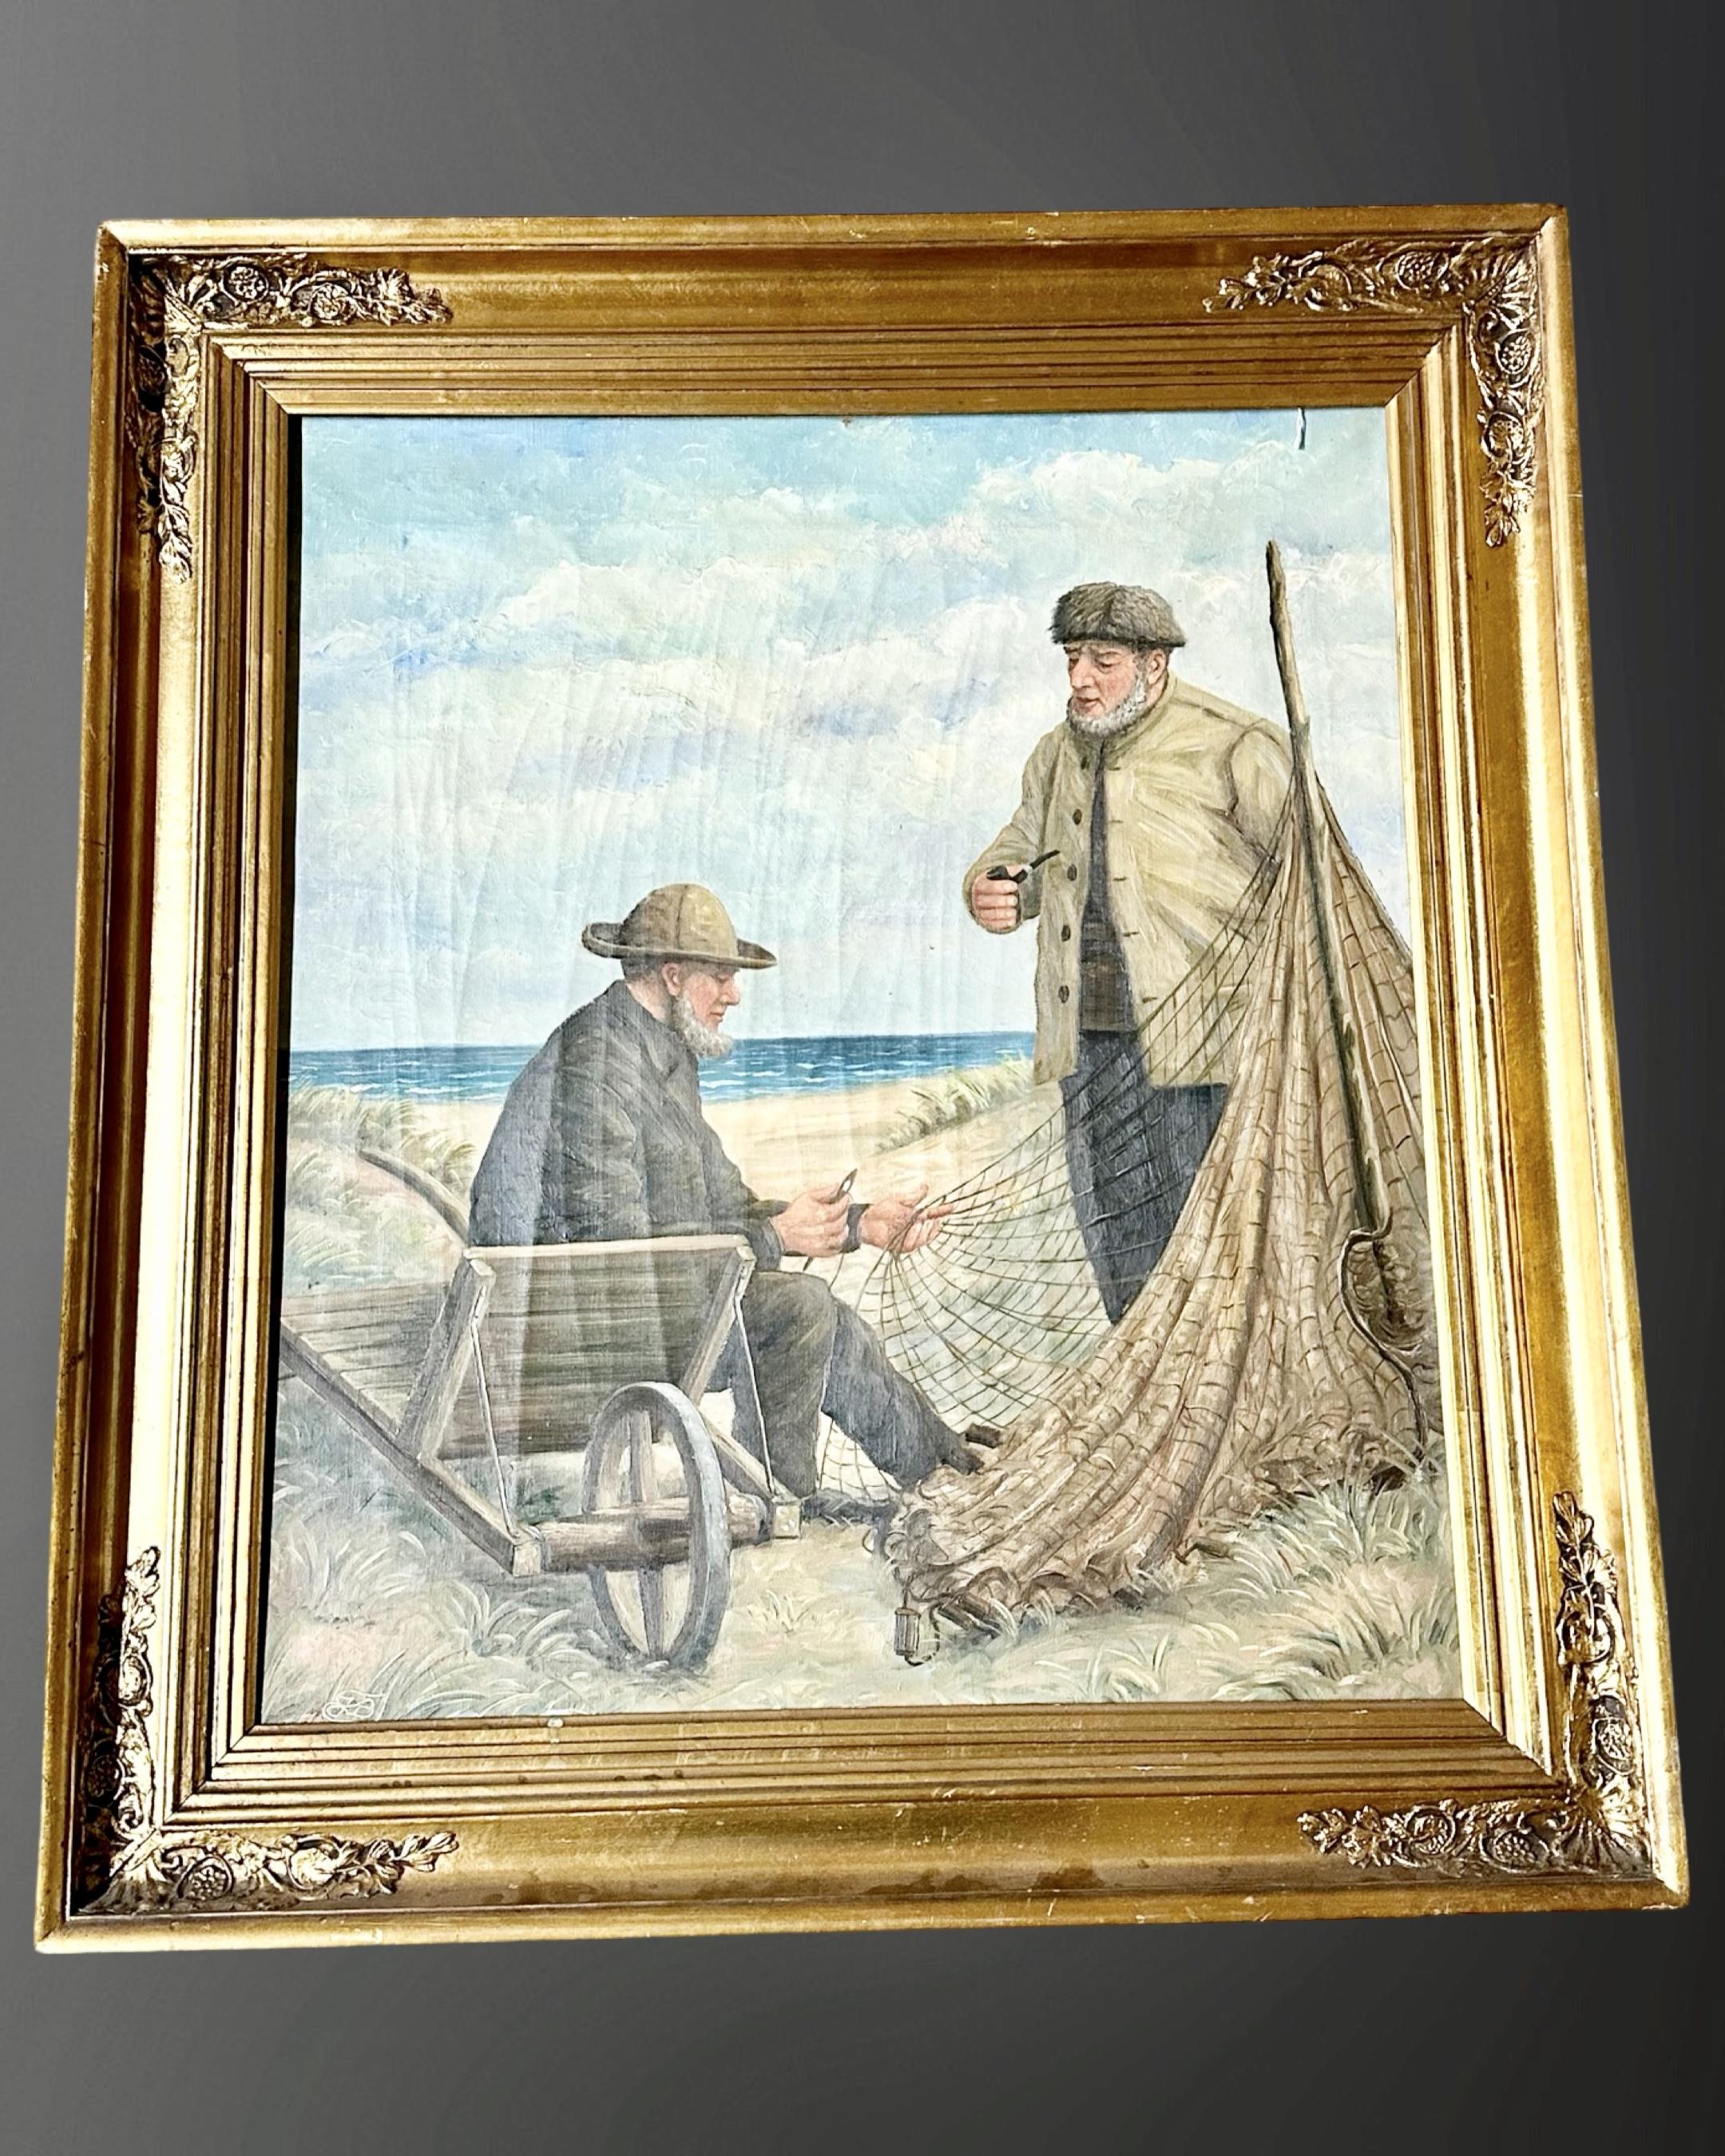 Twentieth century Continental School: Mending nets, oil on canvas, 64 cm x 73 cm,